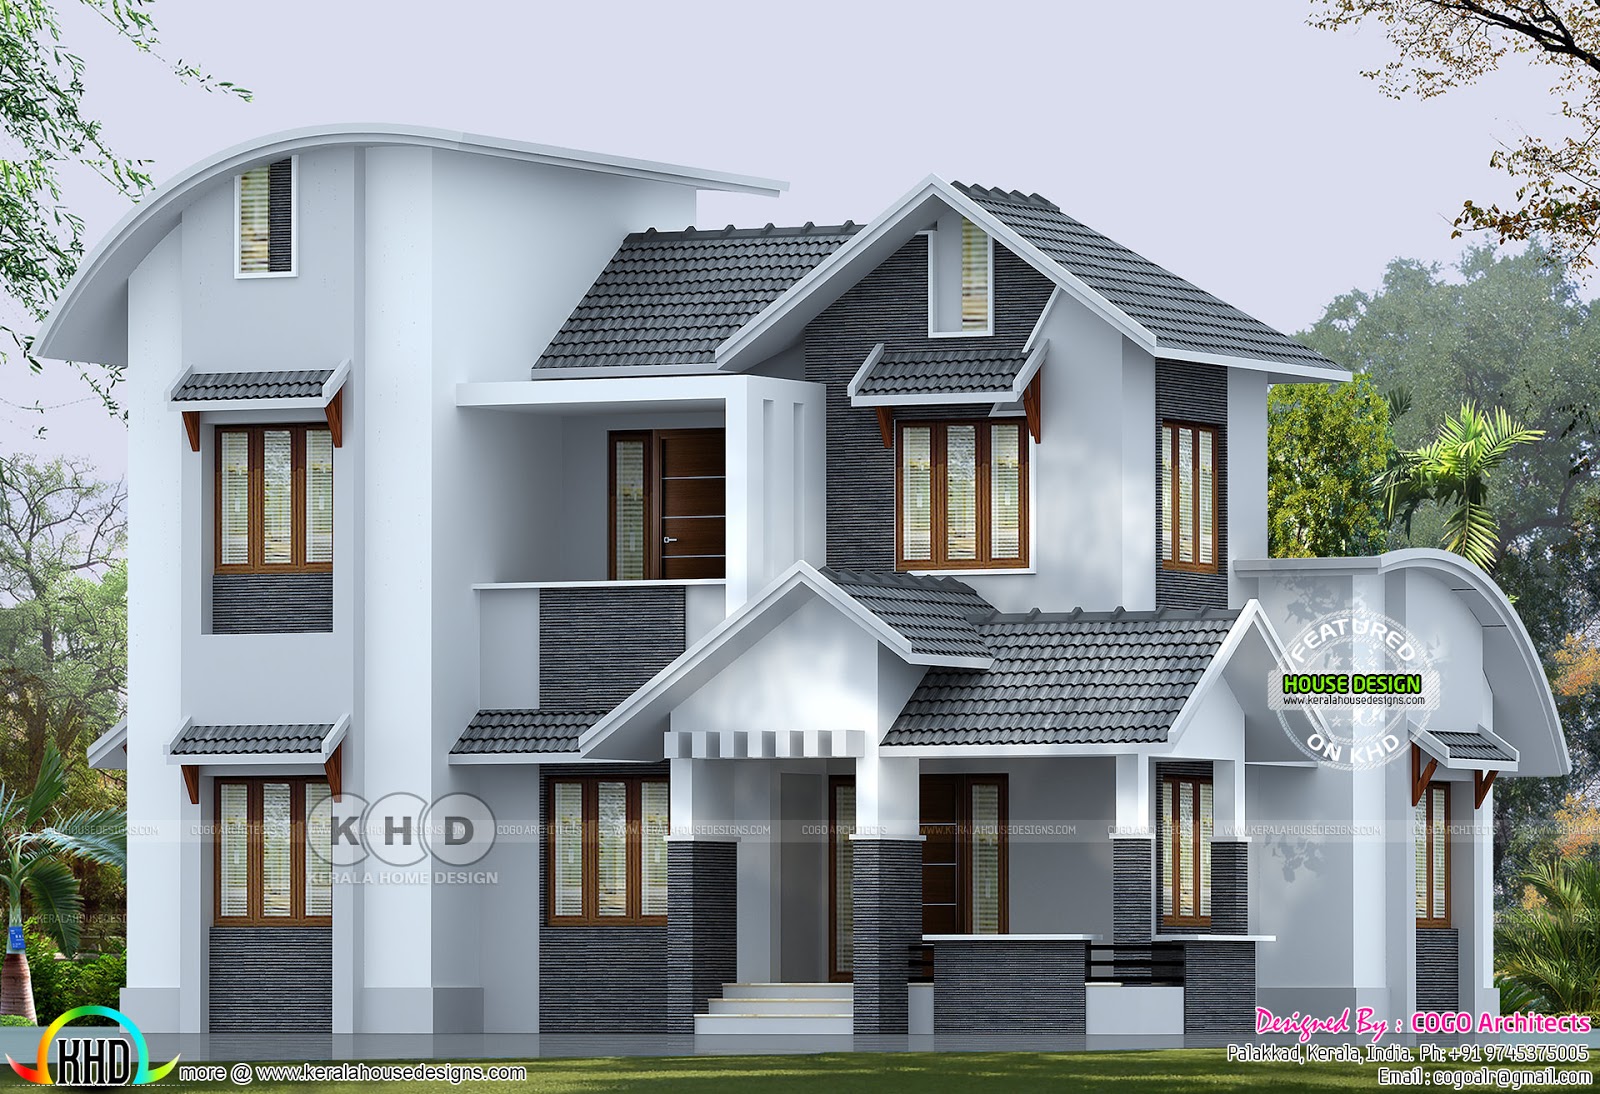  35 lakhs  cost estimated modern home  Kerala home  design 